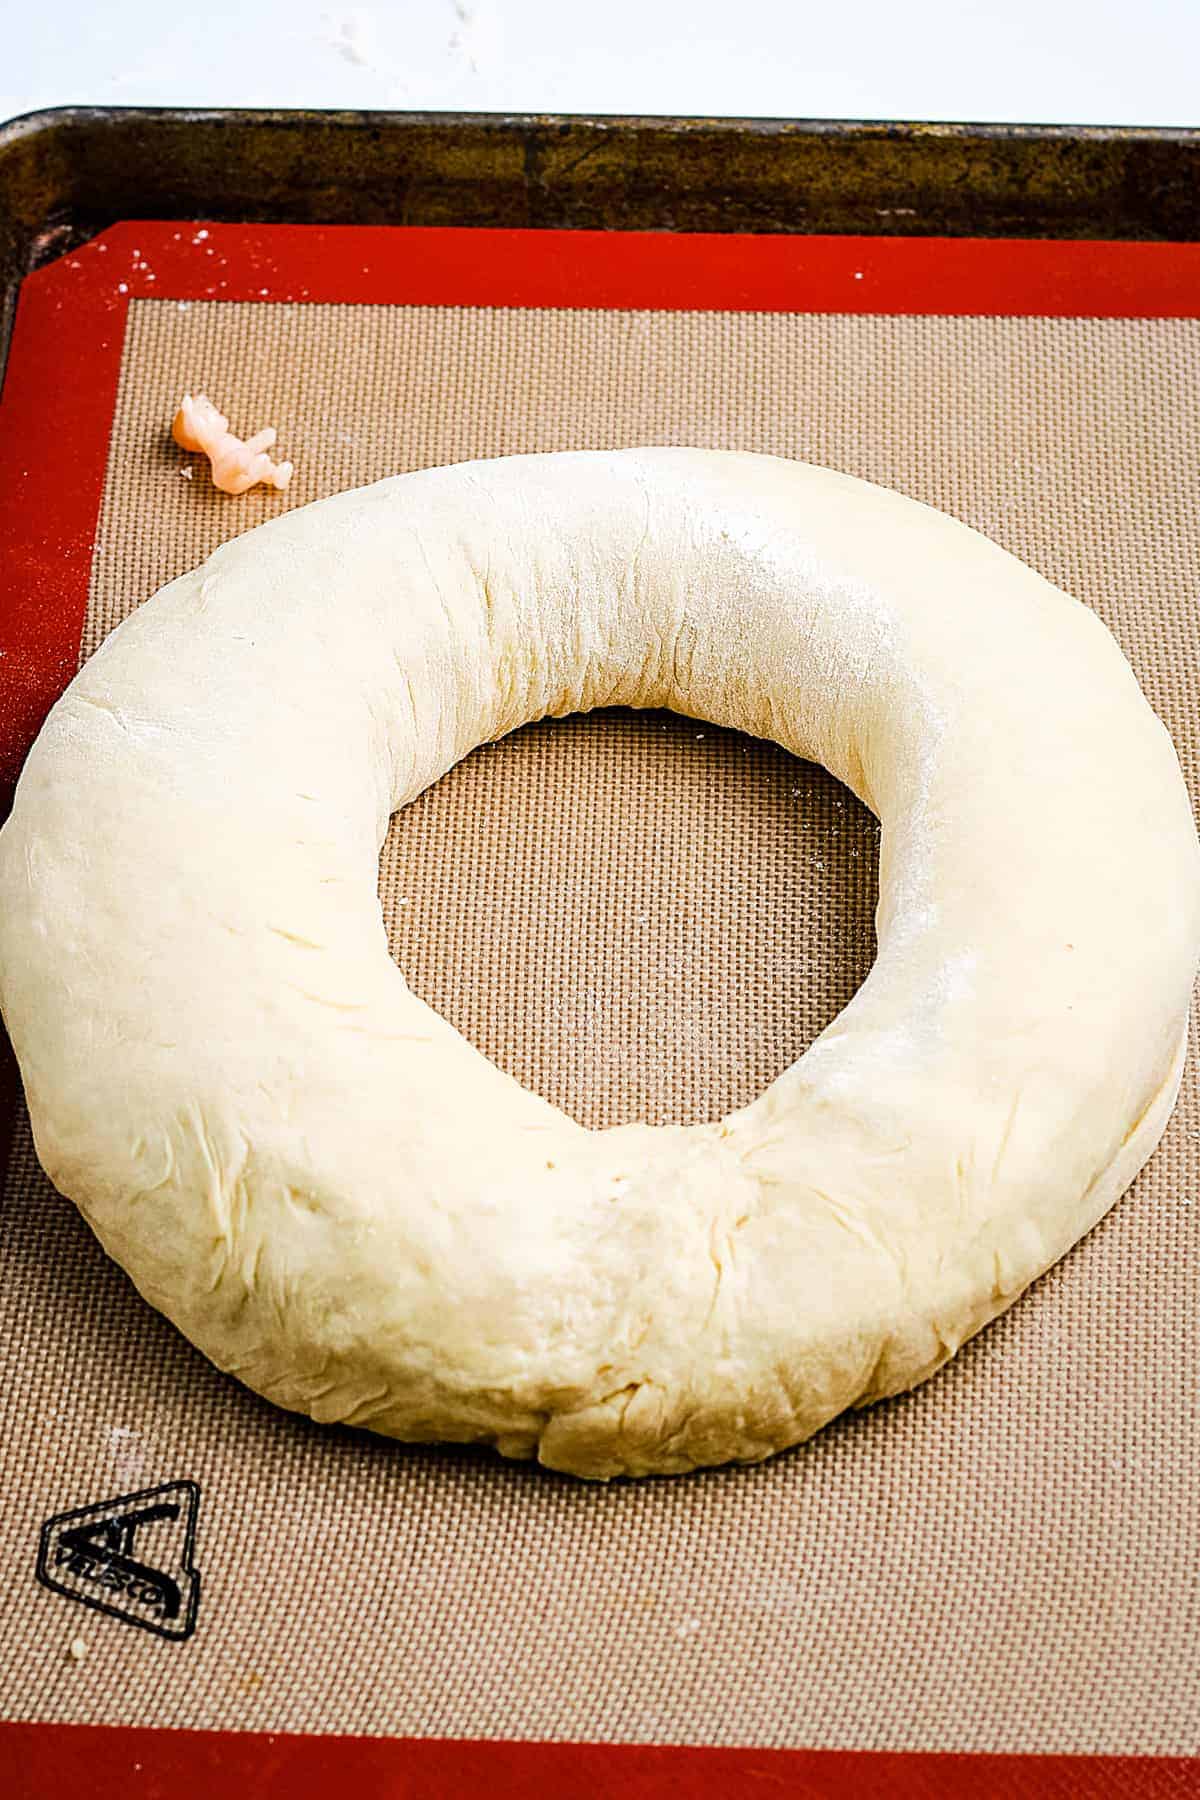 King Cake Dough in a ring shape